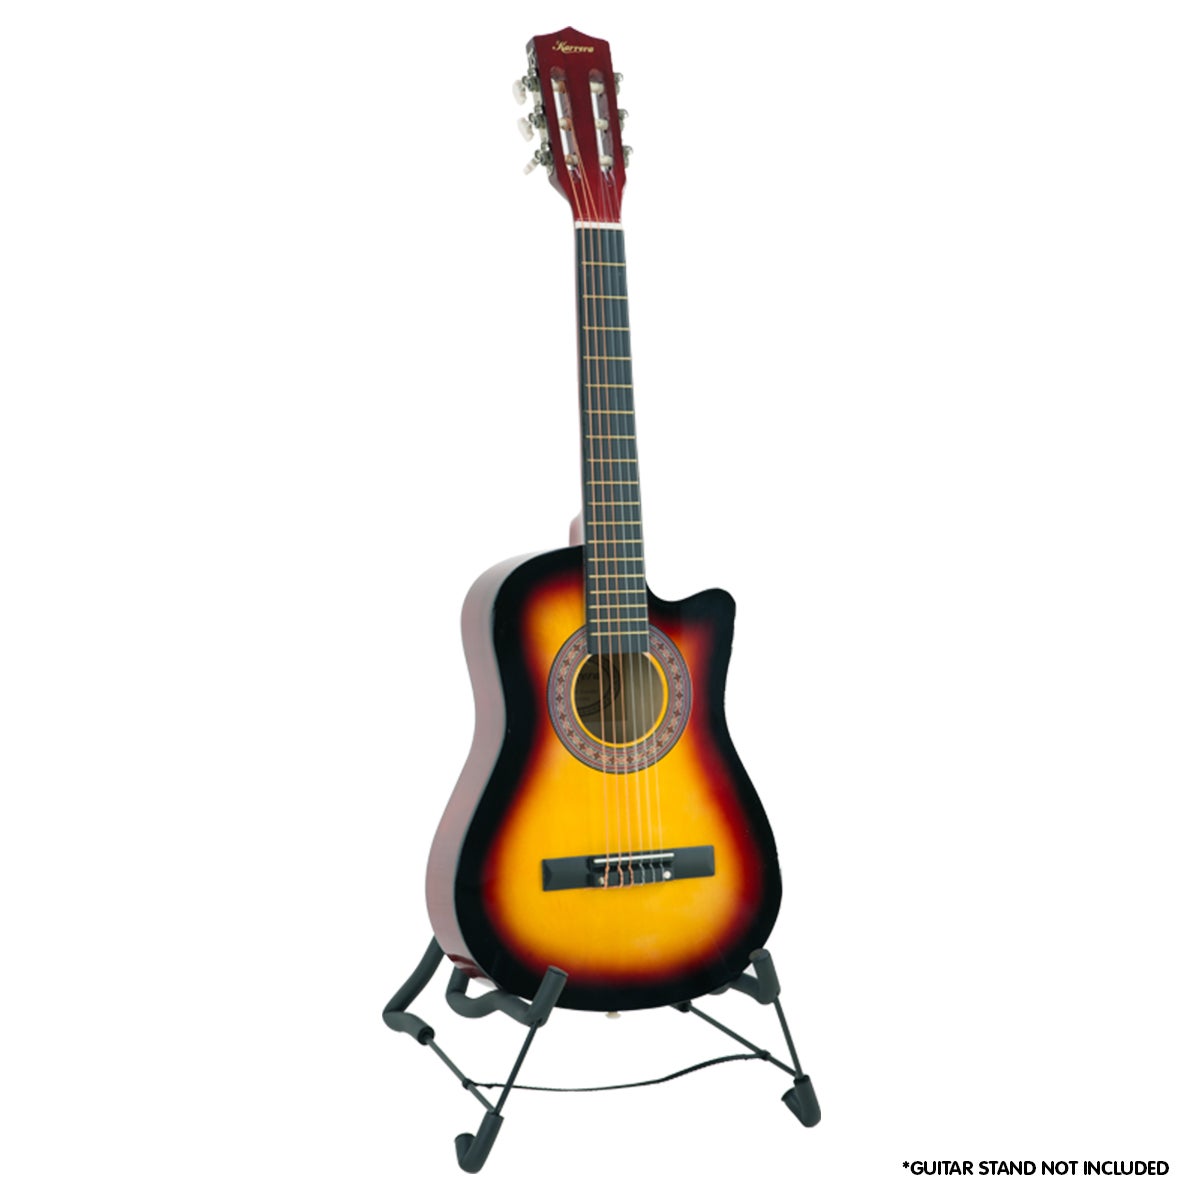 Karrera Childrens Acoustic Cutaway Wooden Guitar Ideal Kids Gift 1/2 Size - Sunburst